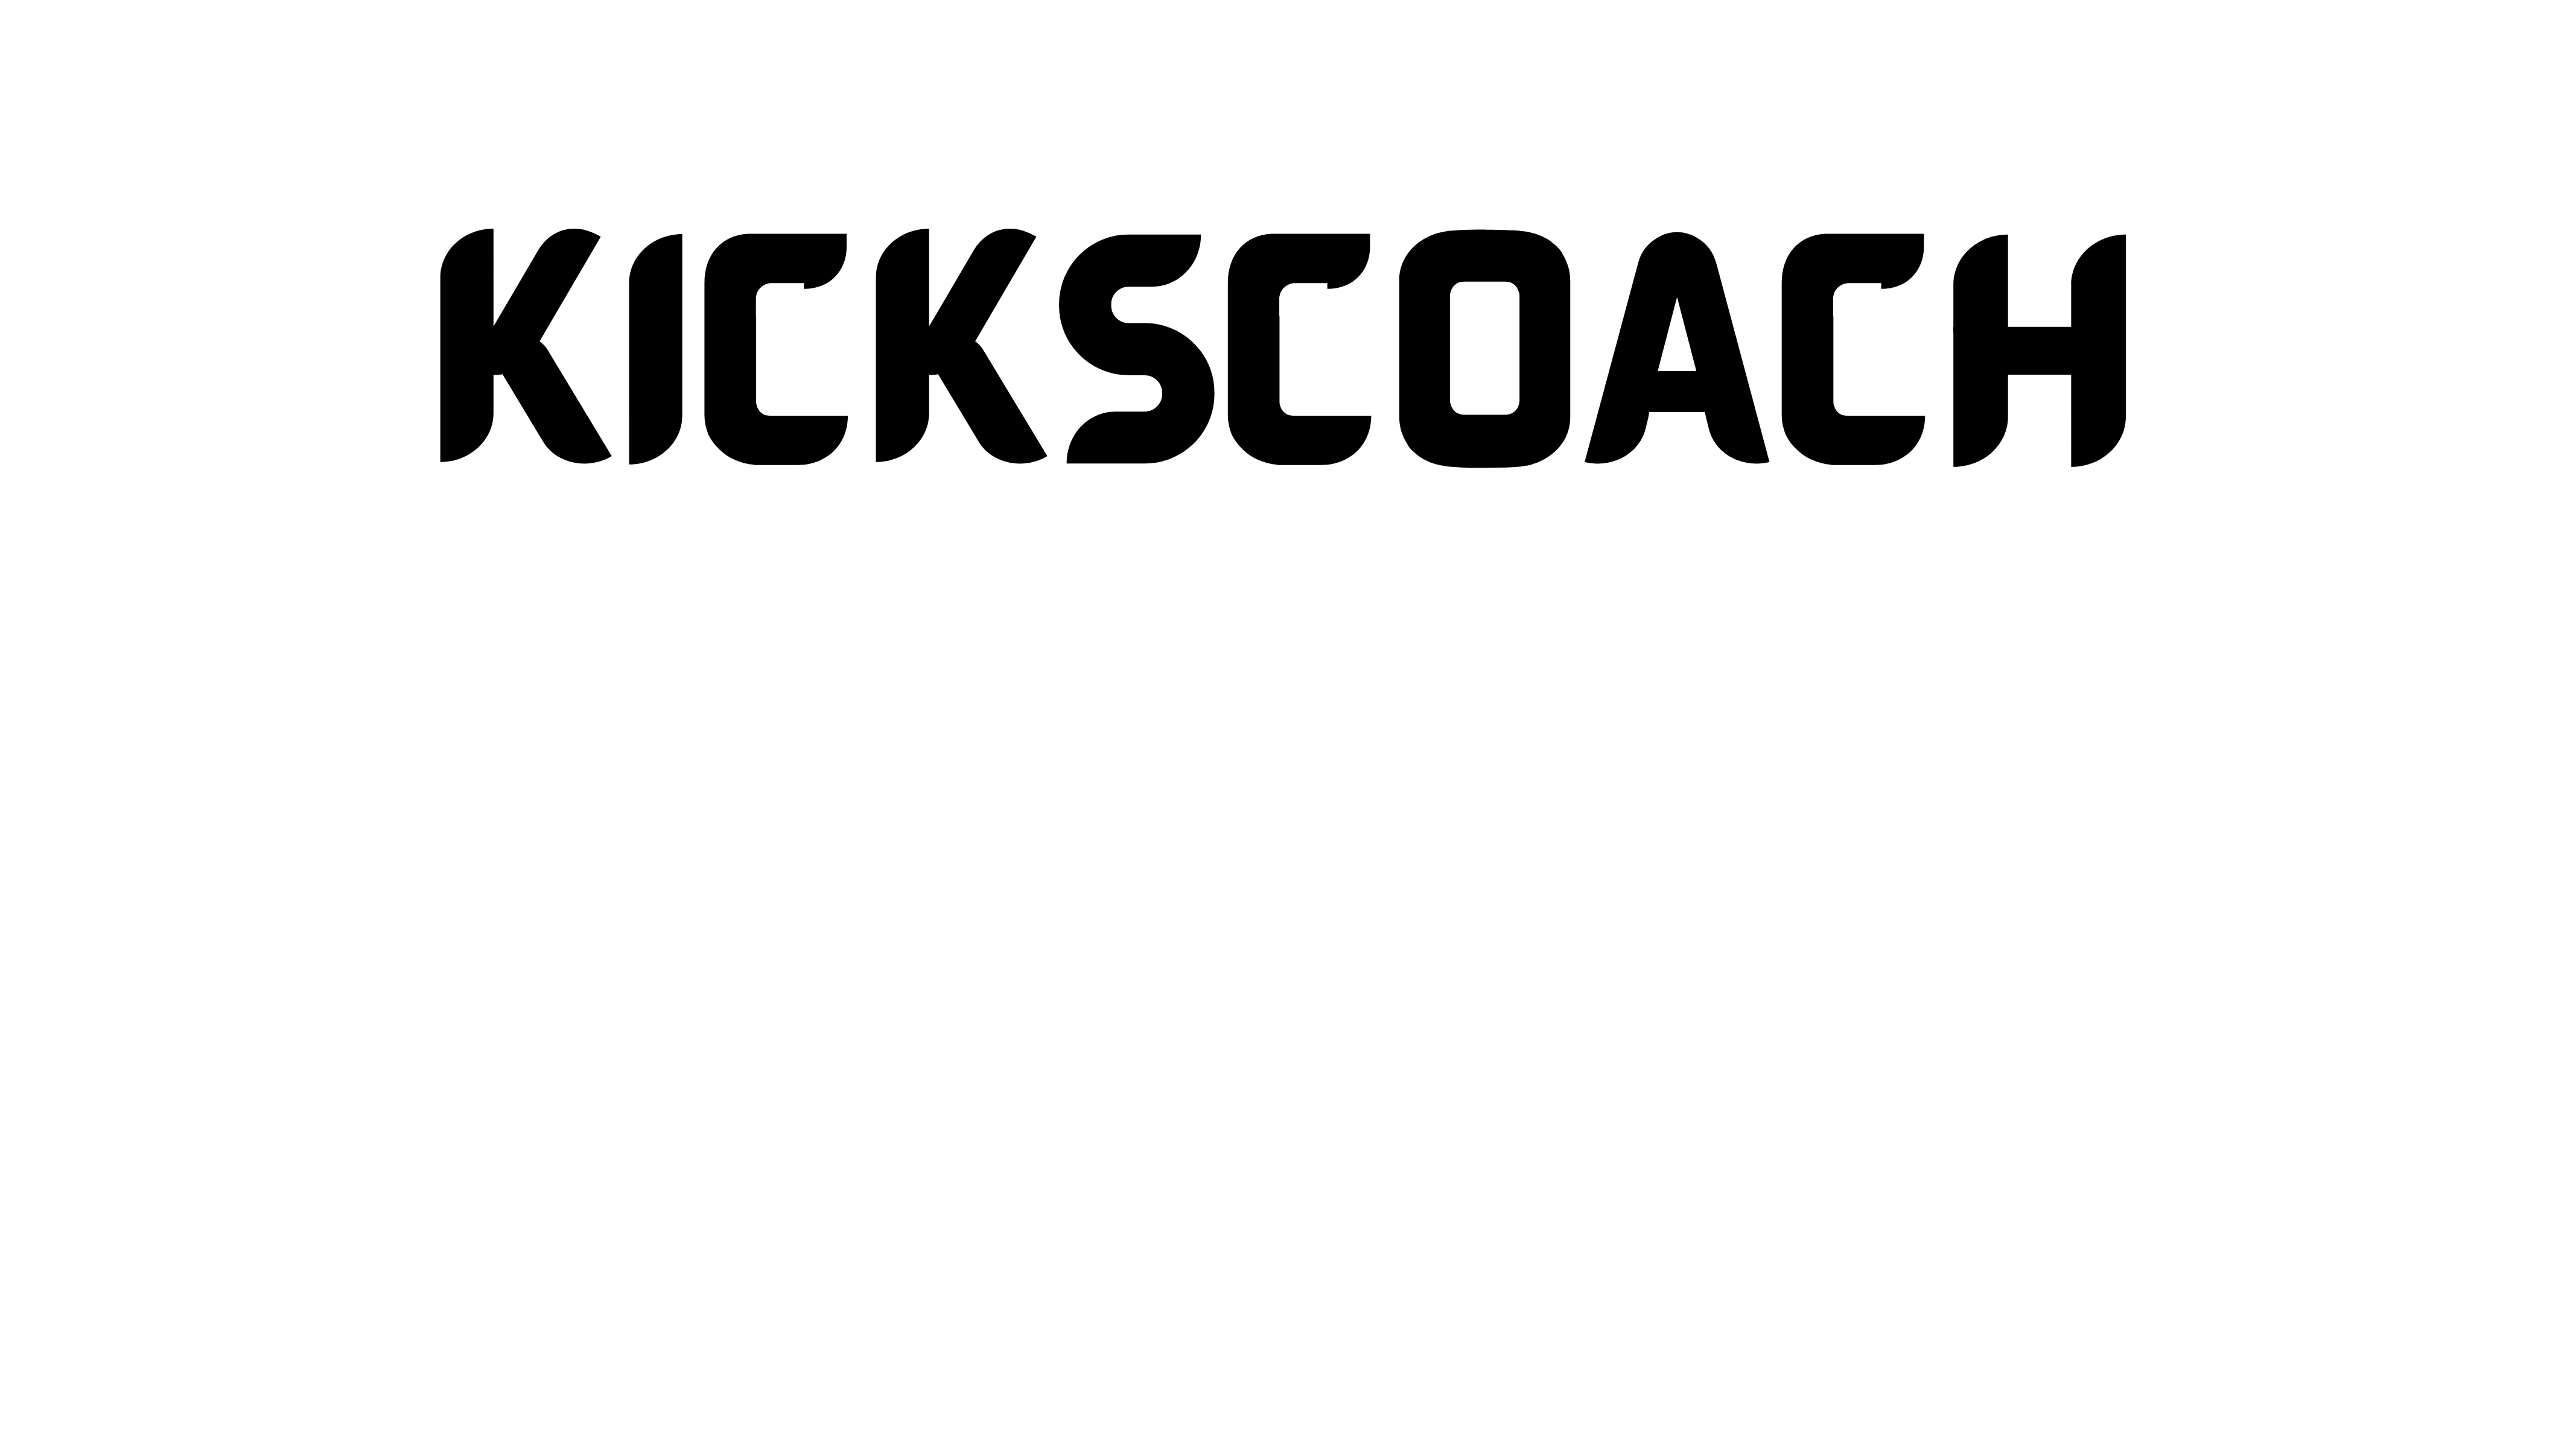 KICKSCOACH